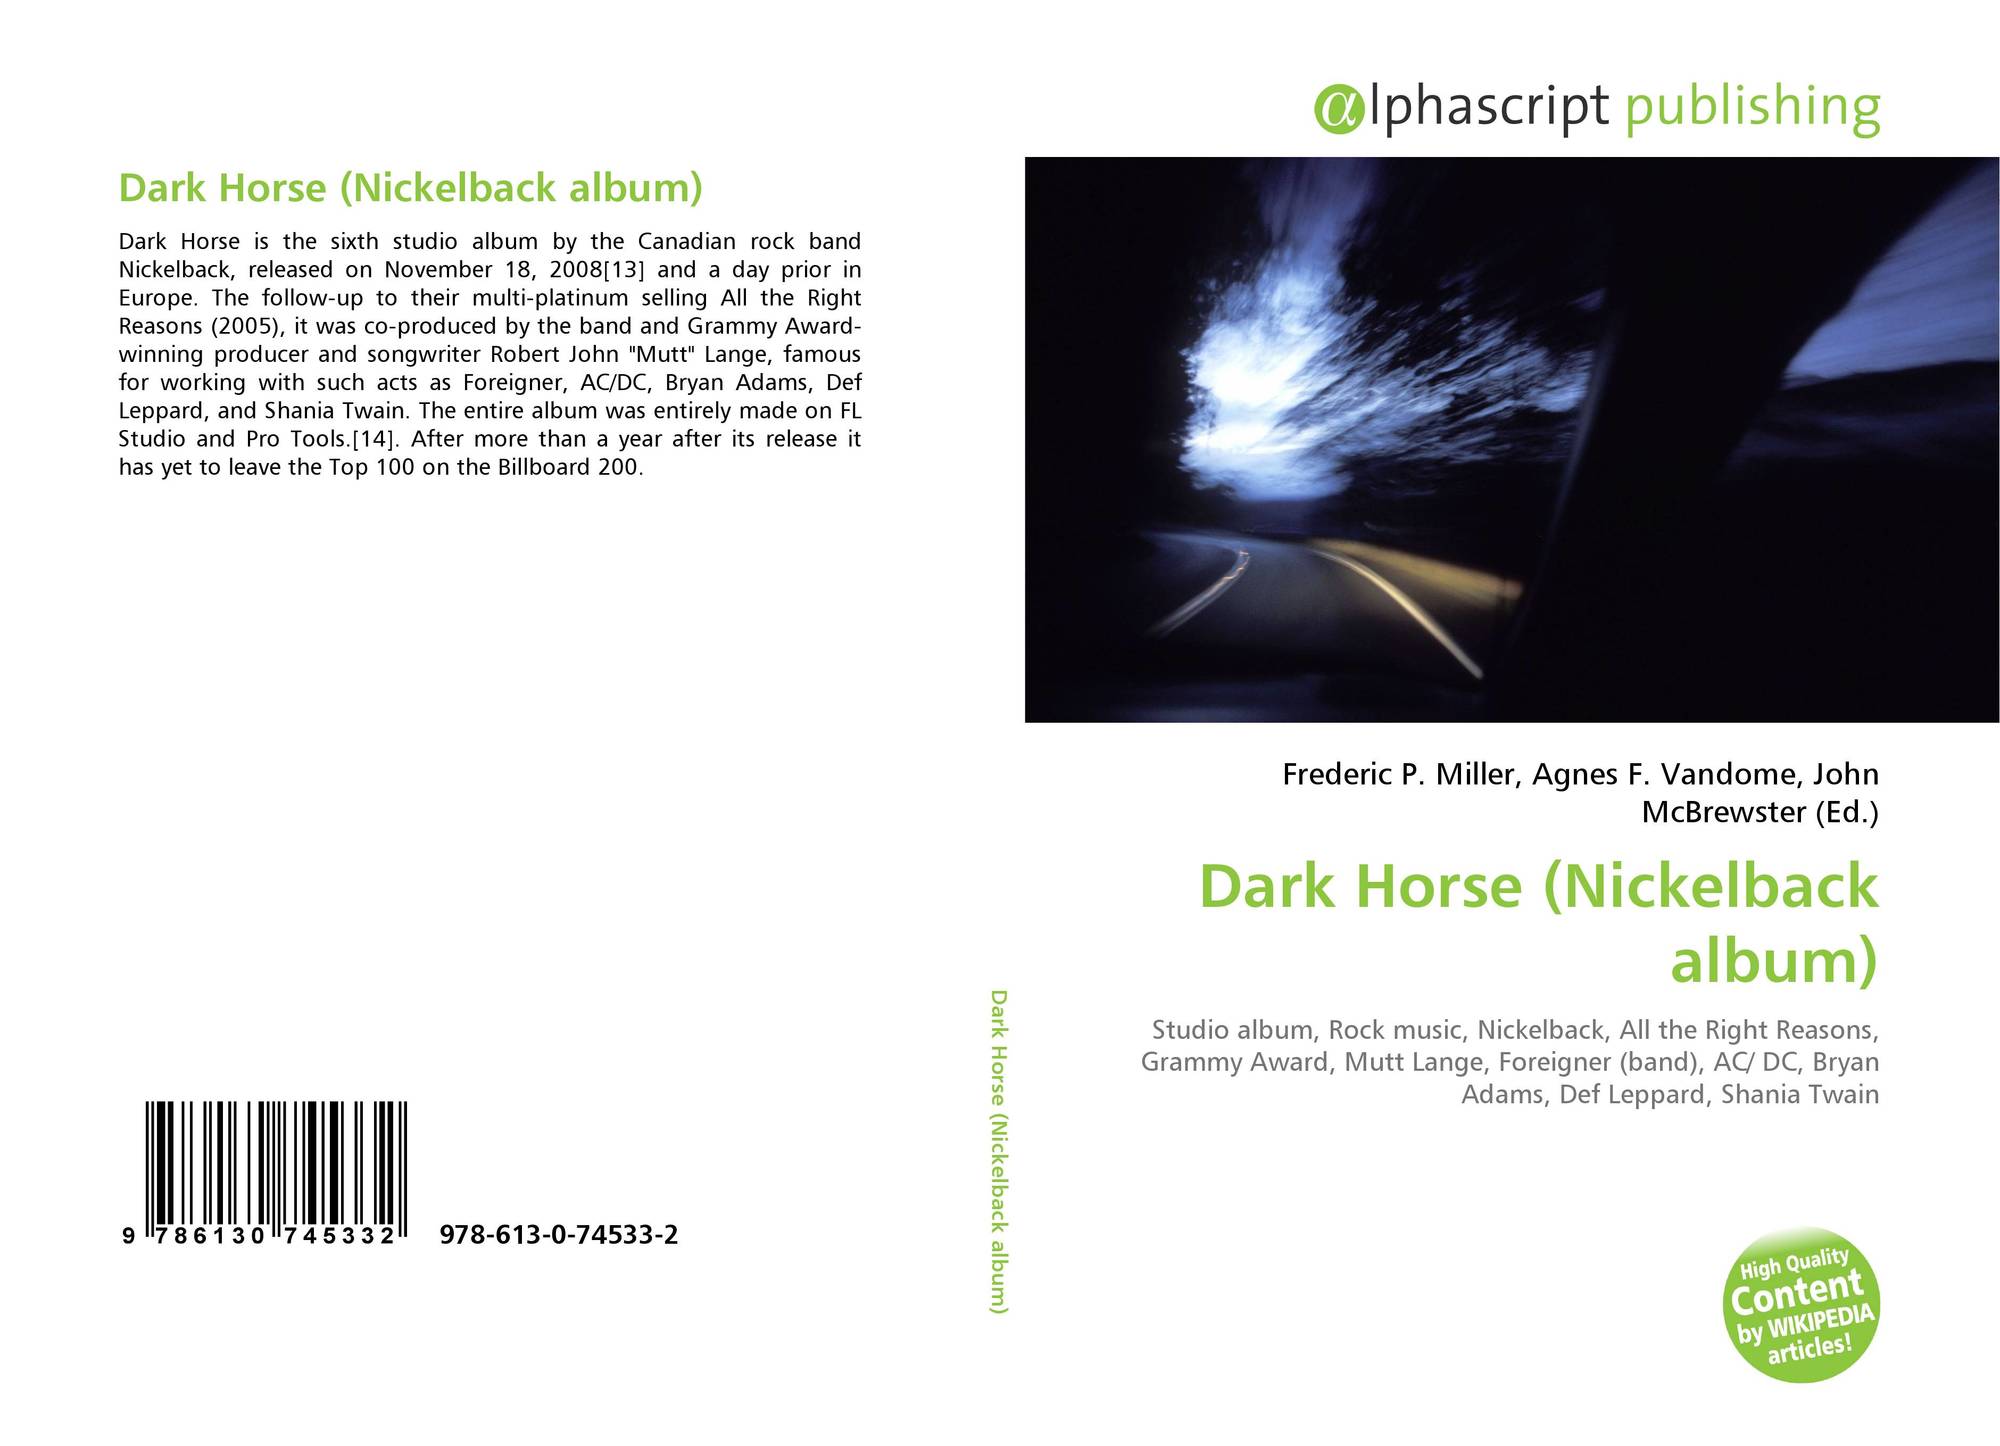 nickelback album